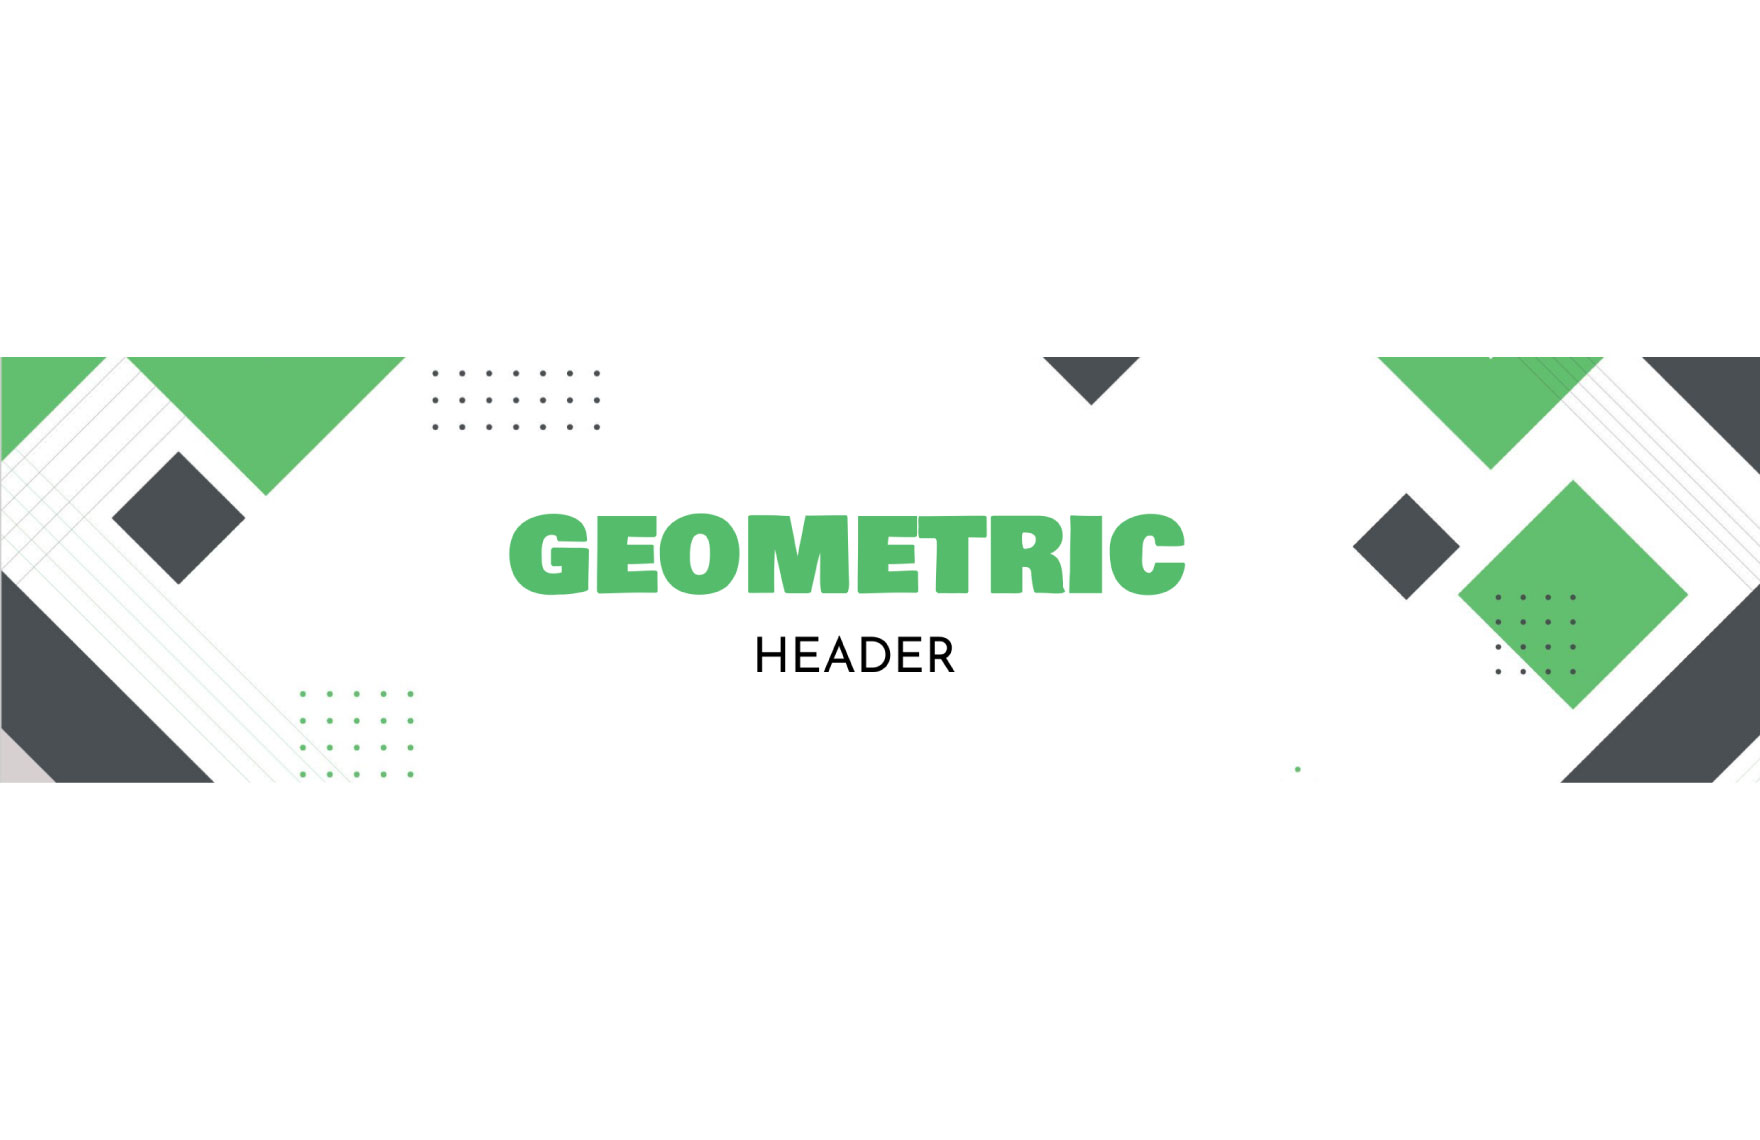 Geometric H1 Header Template